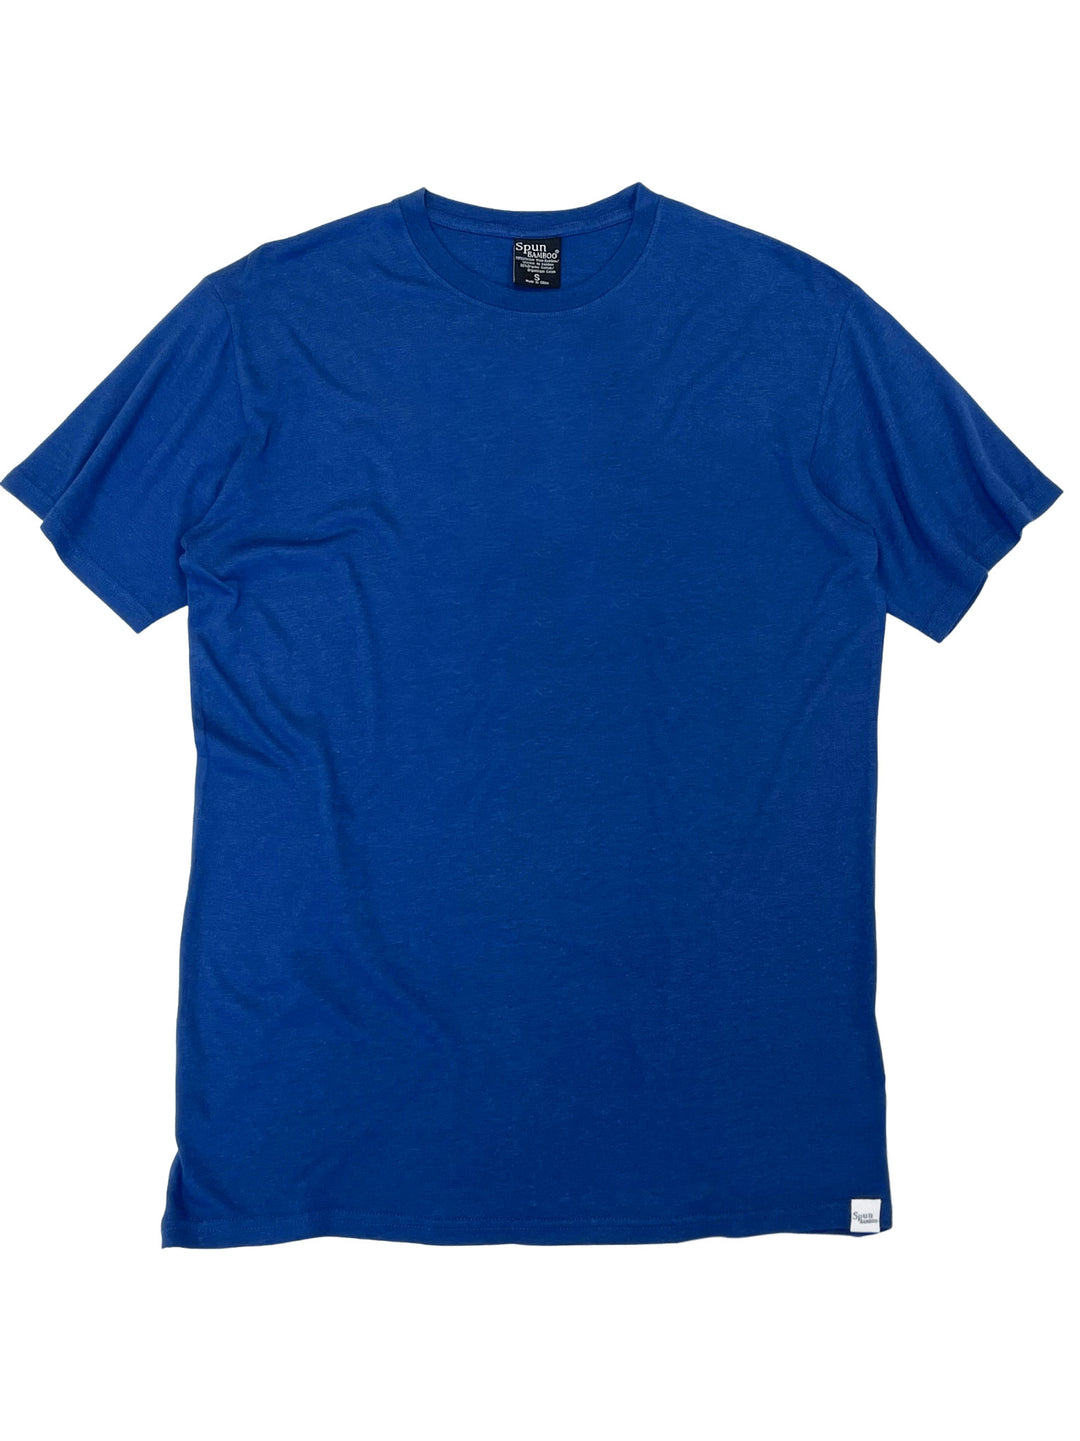 Supreme sz M Long Sleeve Navy Dark Blue Blank T-Shirt